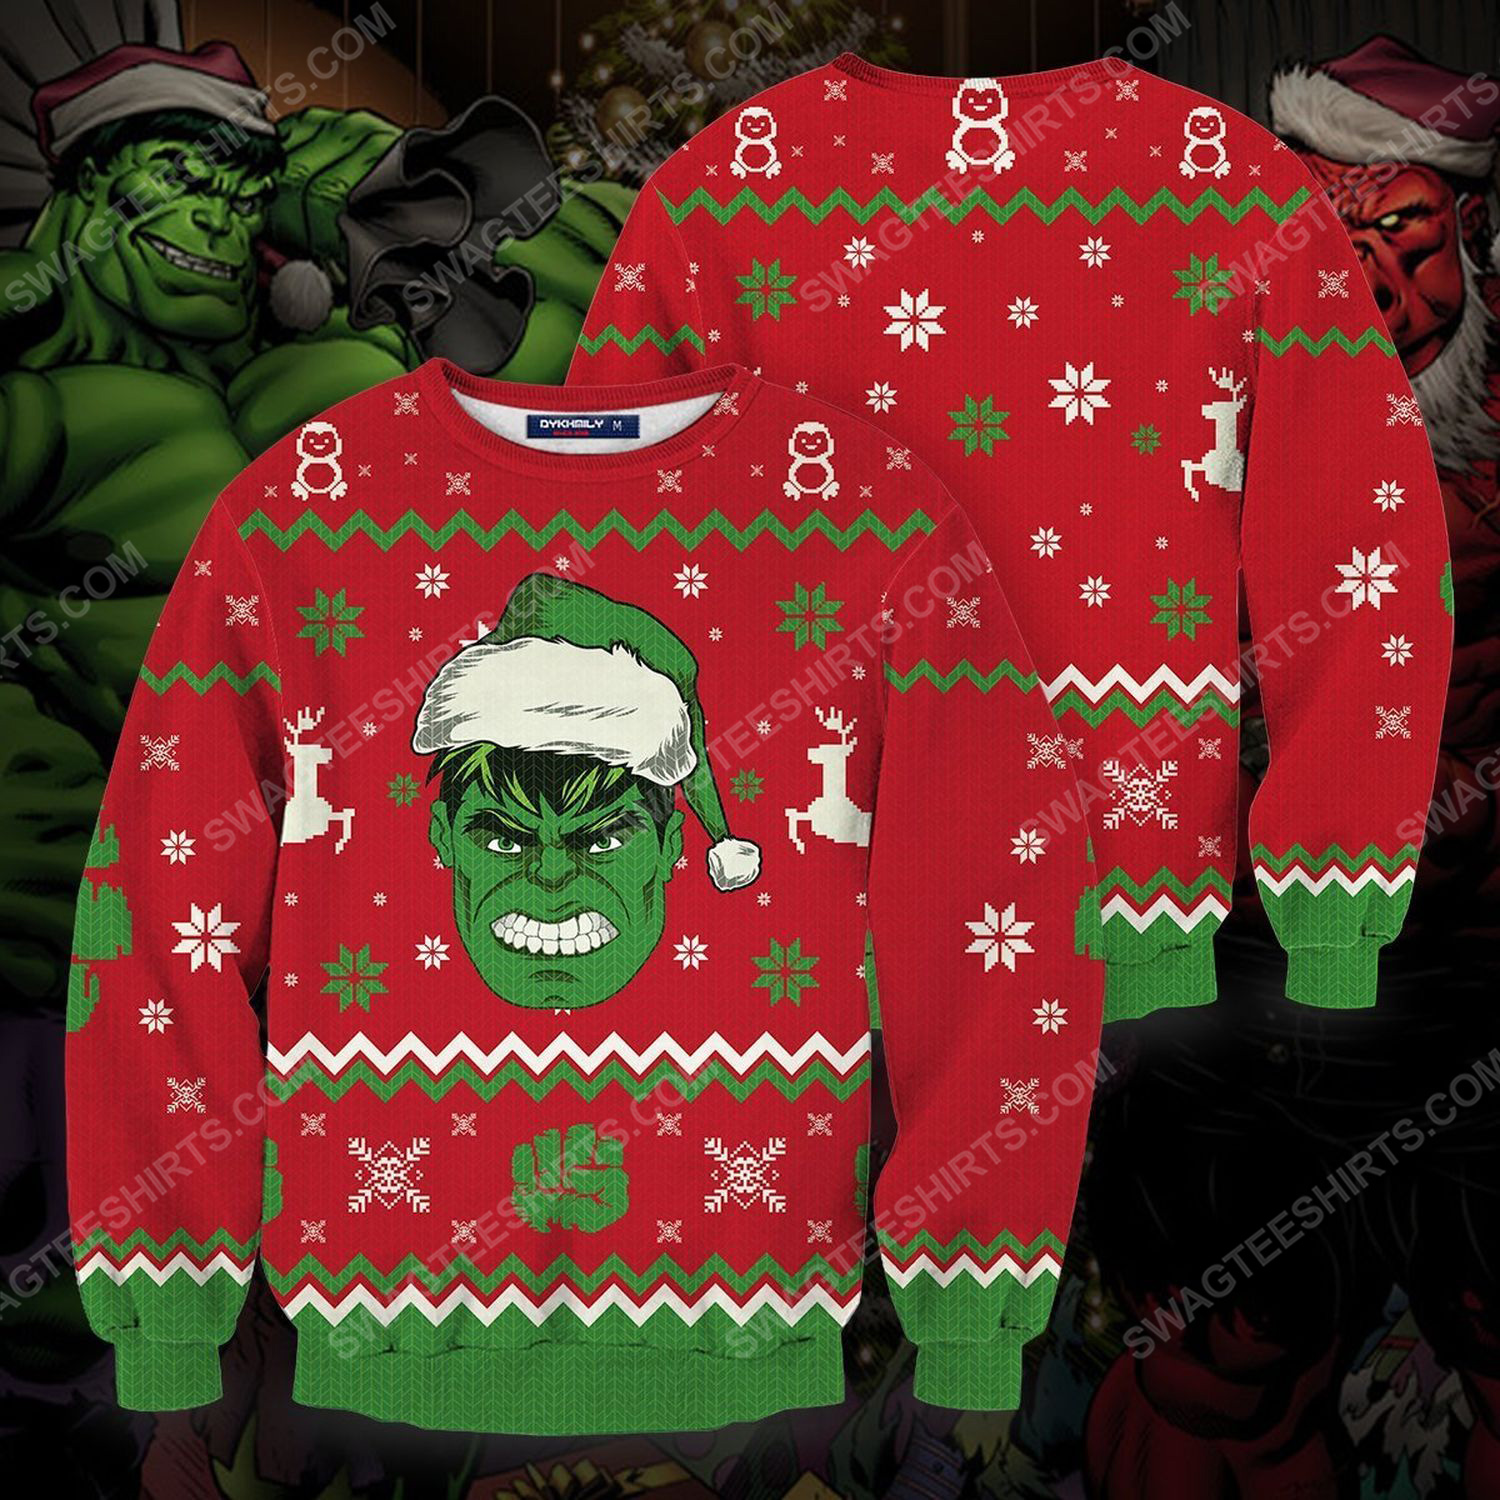 [special edition] Marvel hulk smashing’ full printing ugly christmas sweater – maria